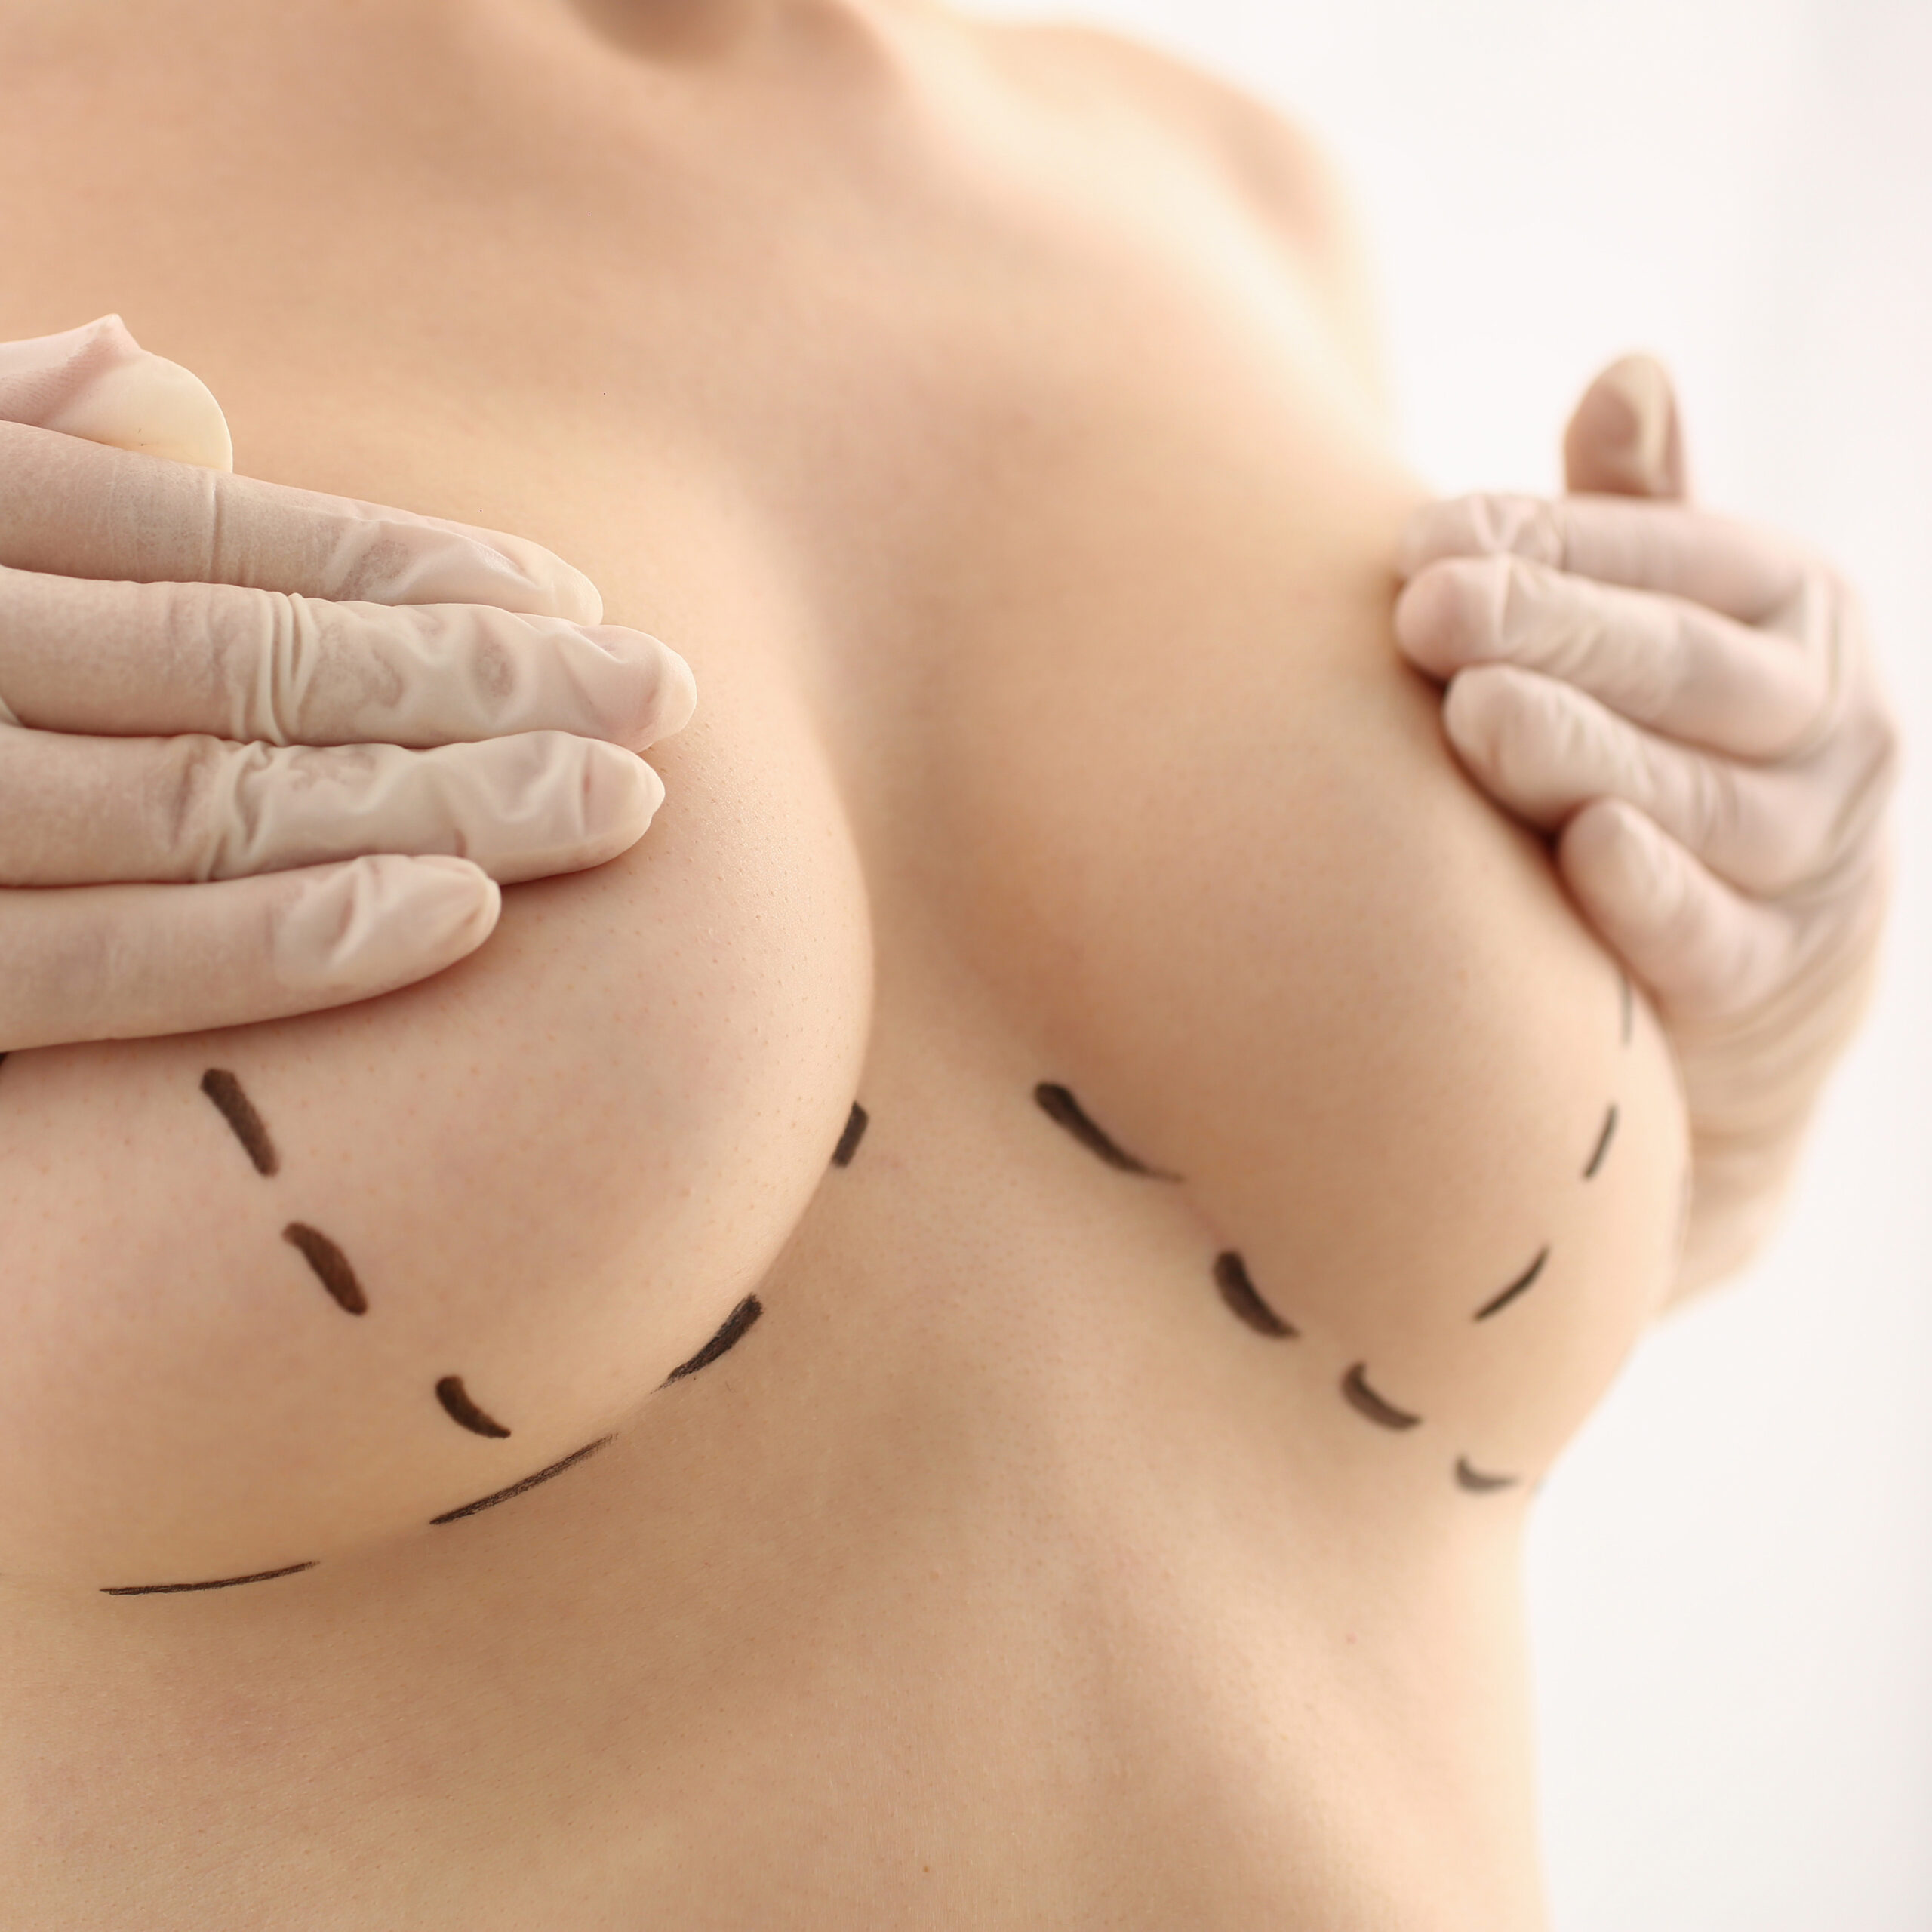 Female patient pre breast surgery